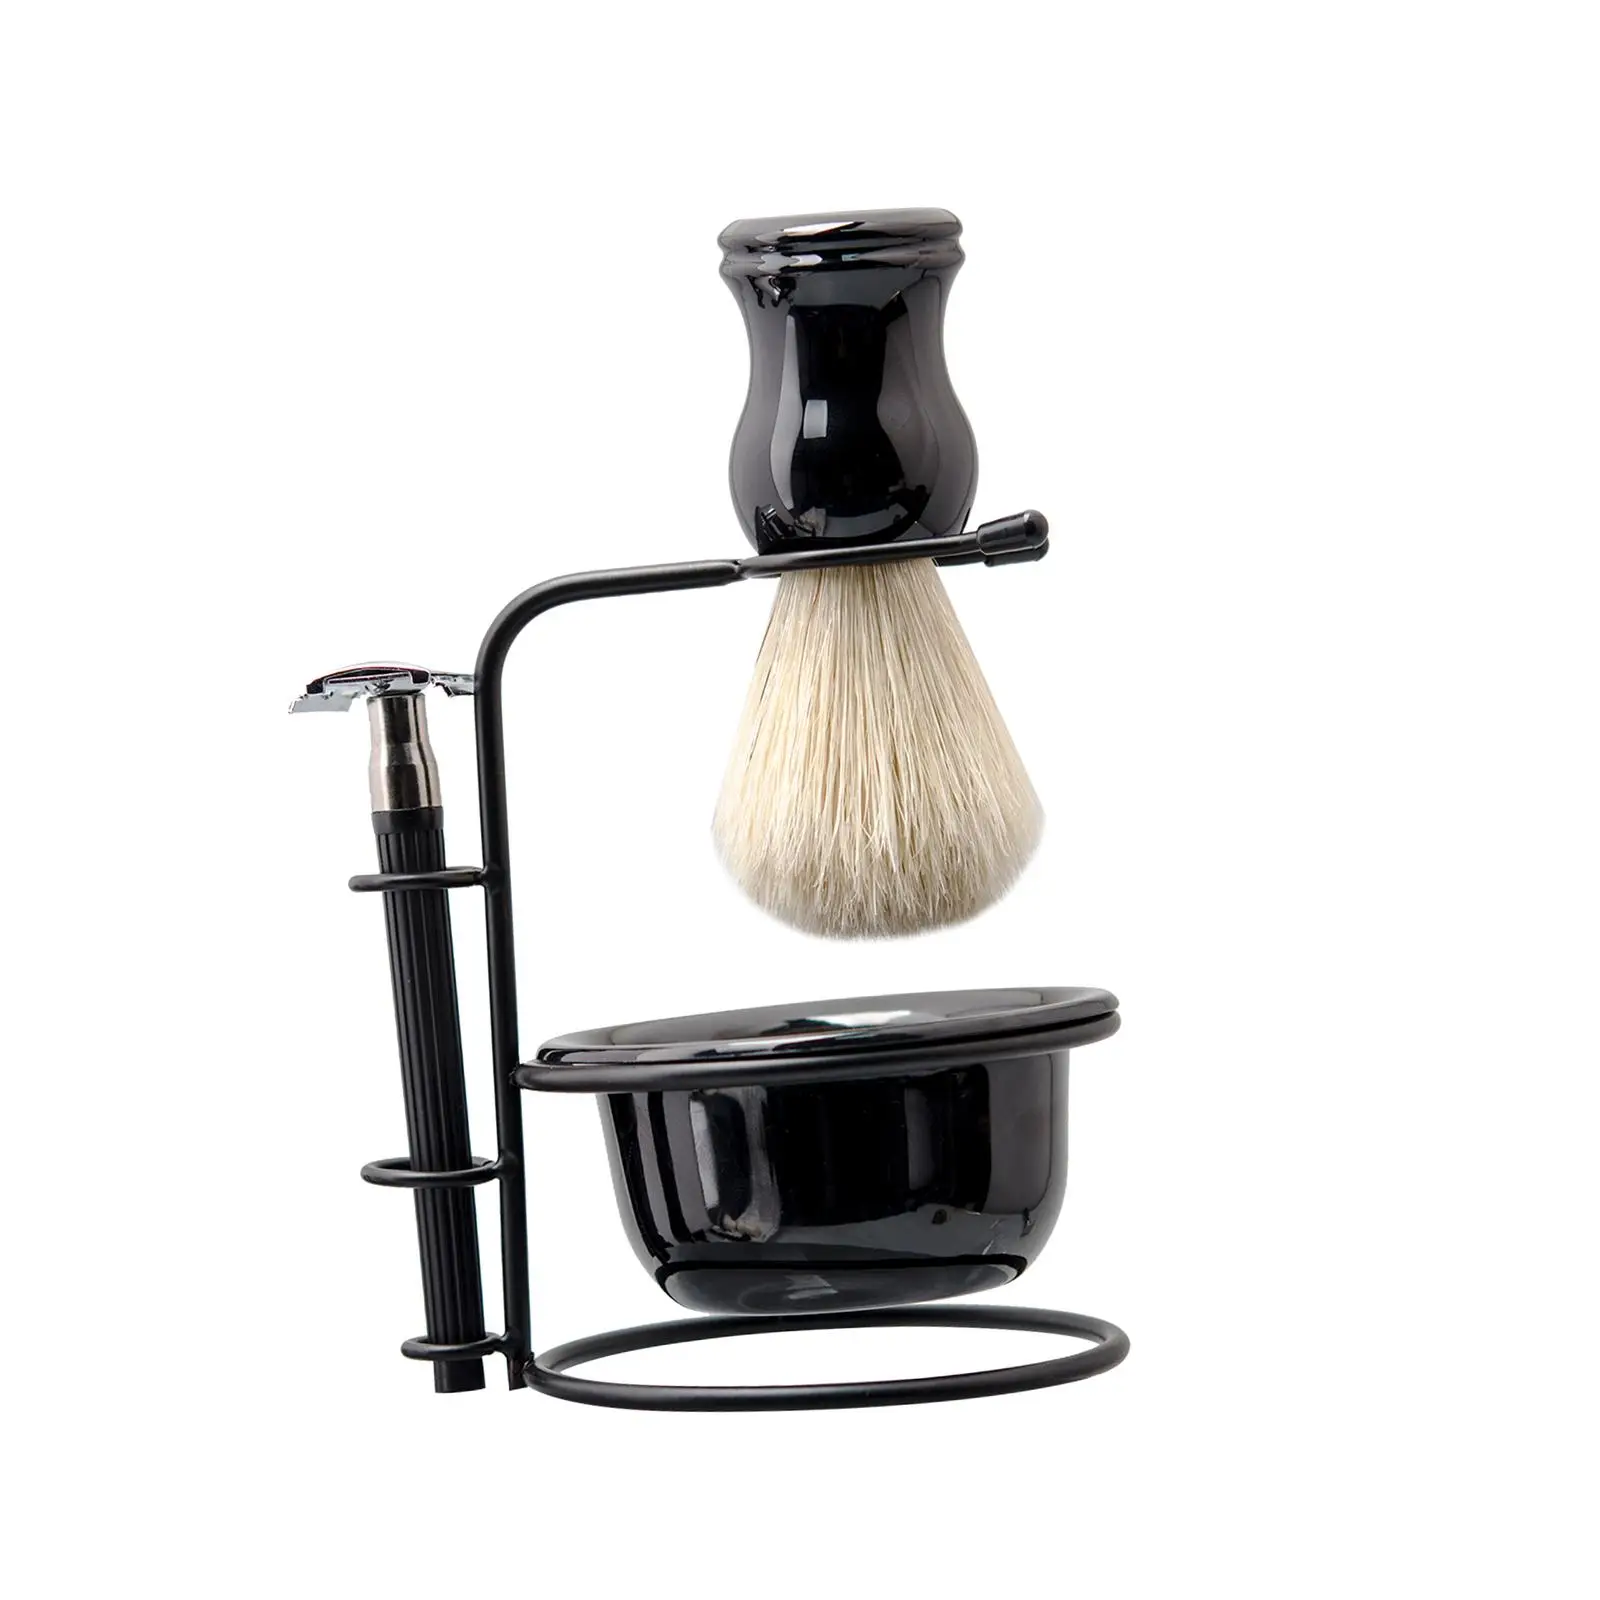 4 in 1 Shaving Set Sturdy Mens Shaving Brush and Bowl Set Shaving Bowl Mug Brush Holder Perfect for Every Day Use Smooth Shave